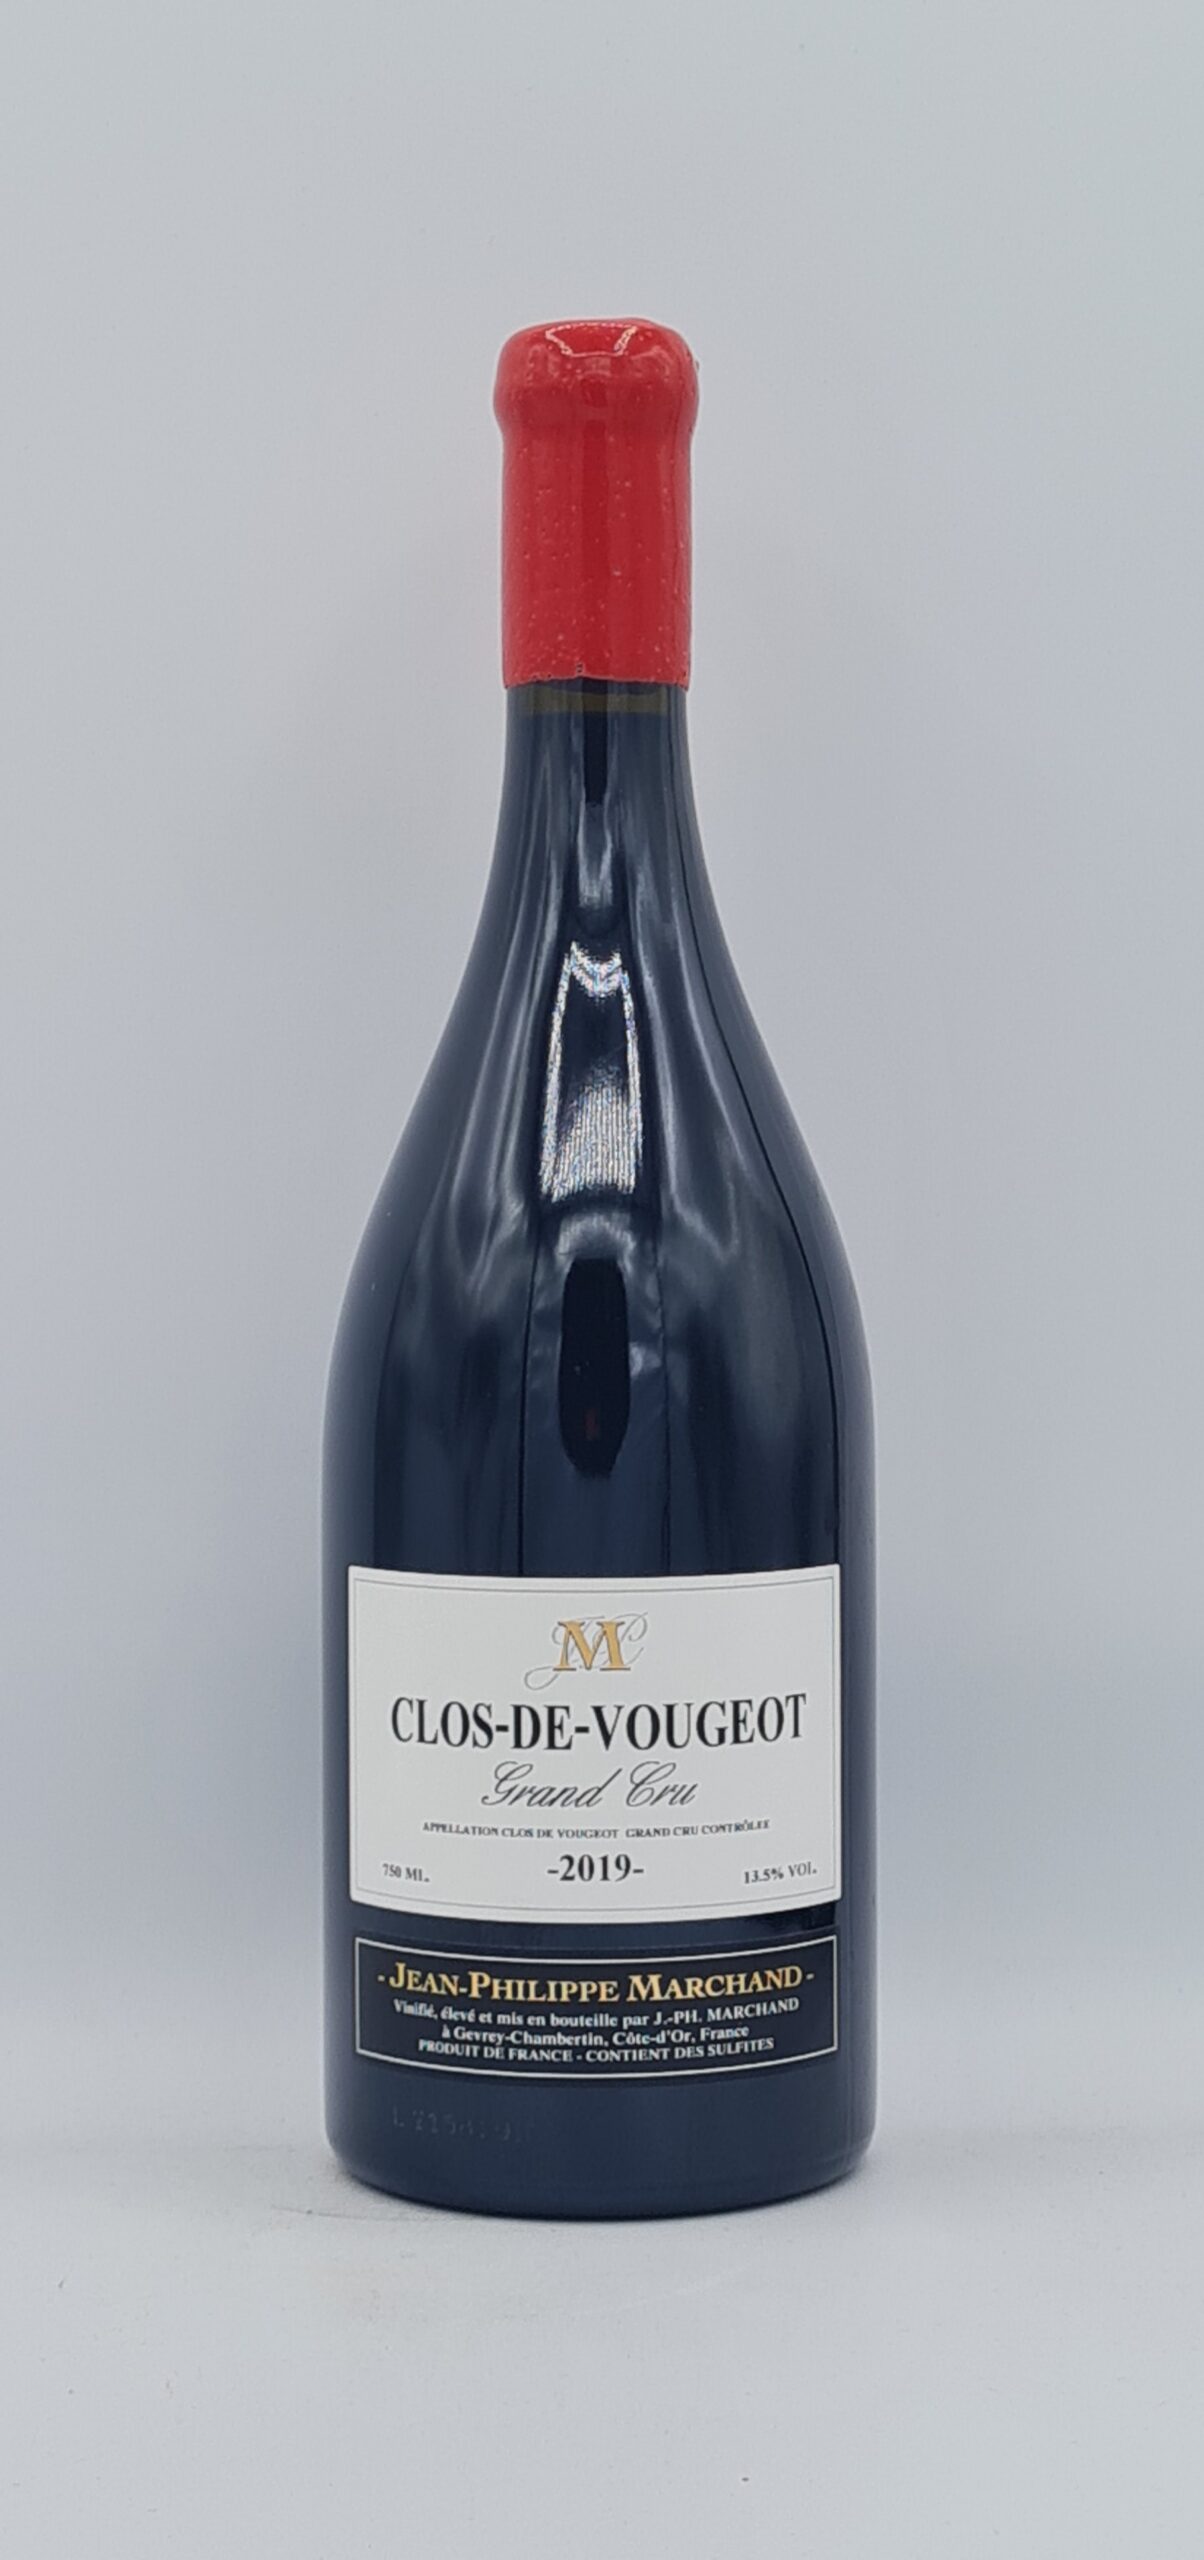 Bourgogne Clos Vougeot Grand Cru 2019 Domaine JPH Marchand